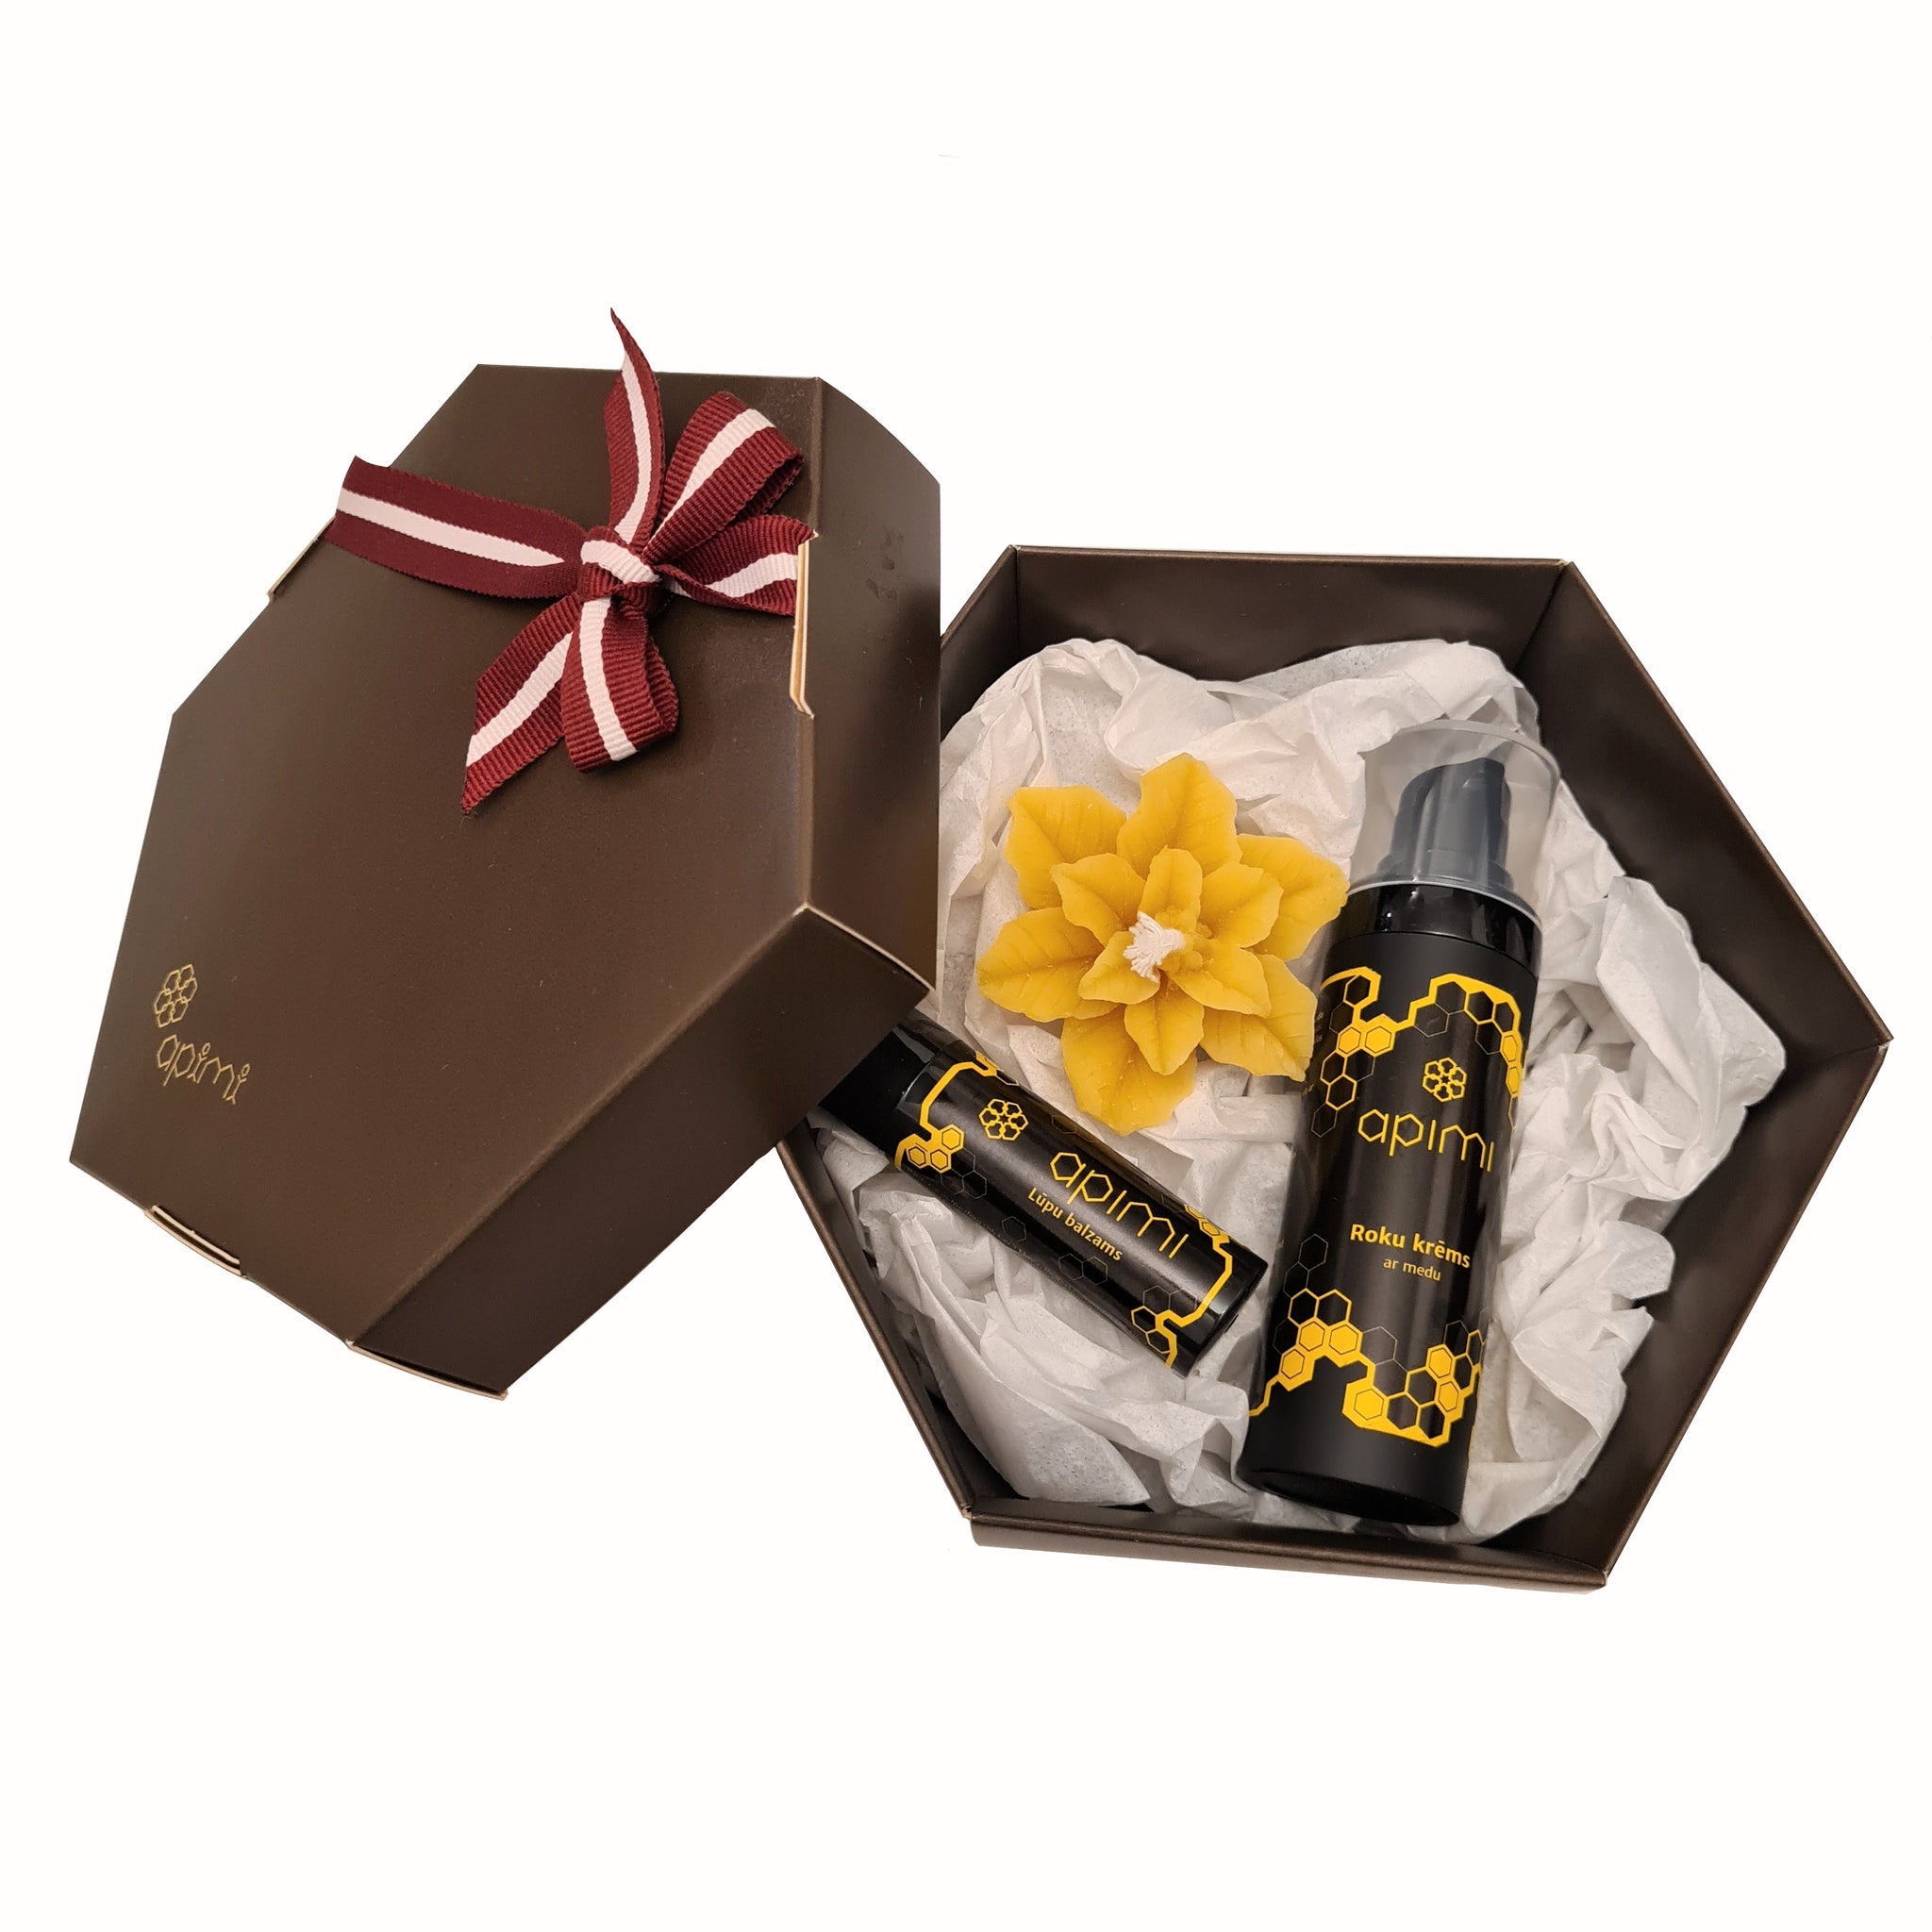 Dāvanu komplekts - Roku krēms + Lūpu balzams + Bišu vaska svecīte / Gift set - Hand cream + Lip balm + Beeswax candle